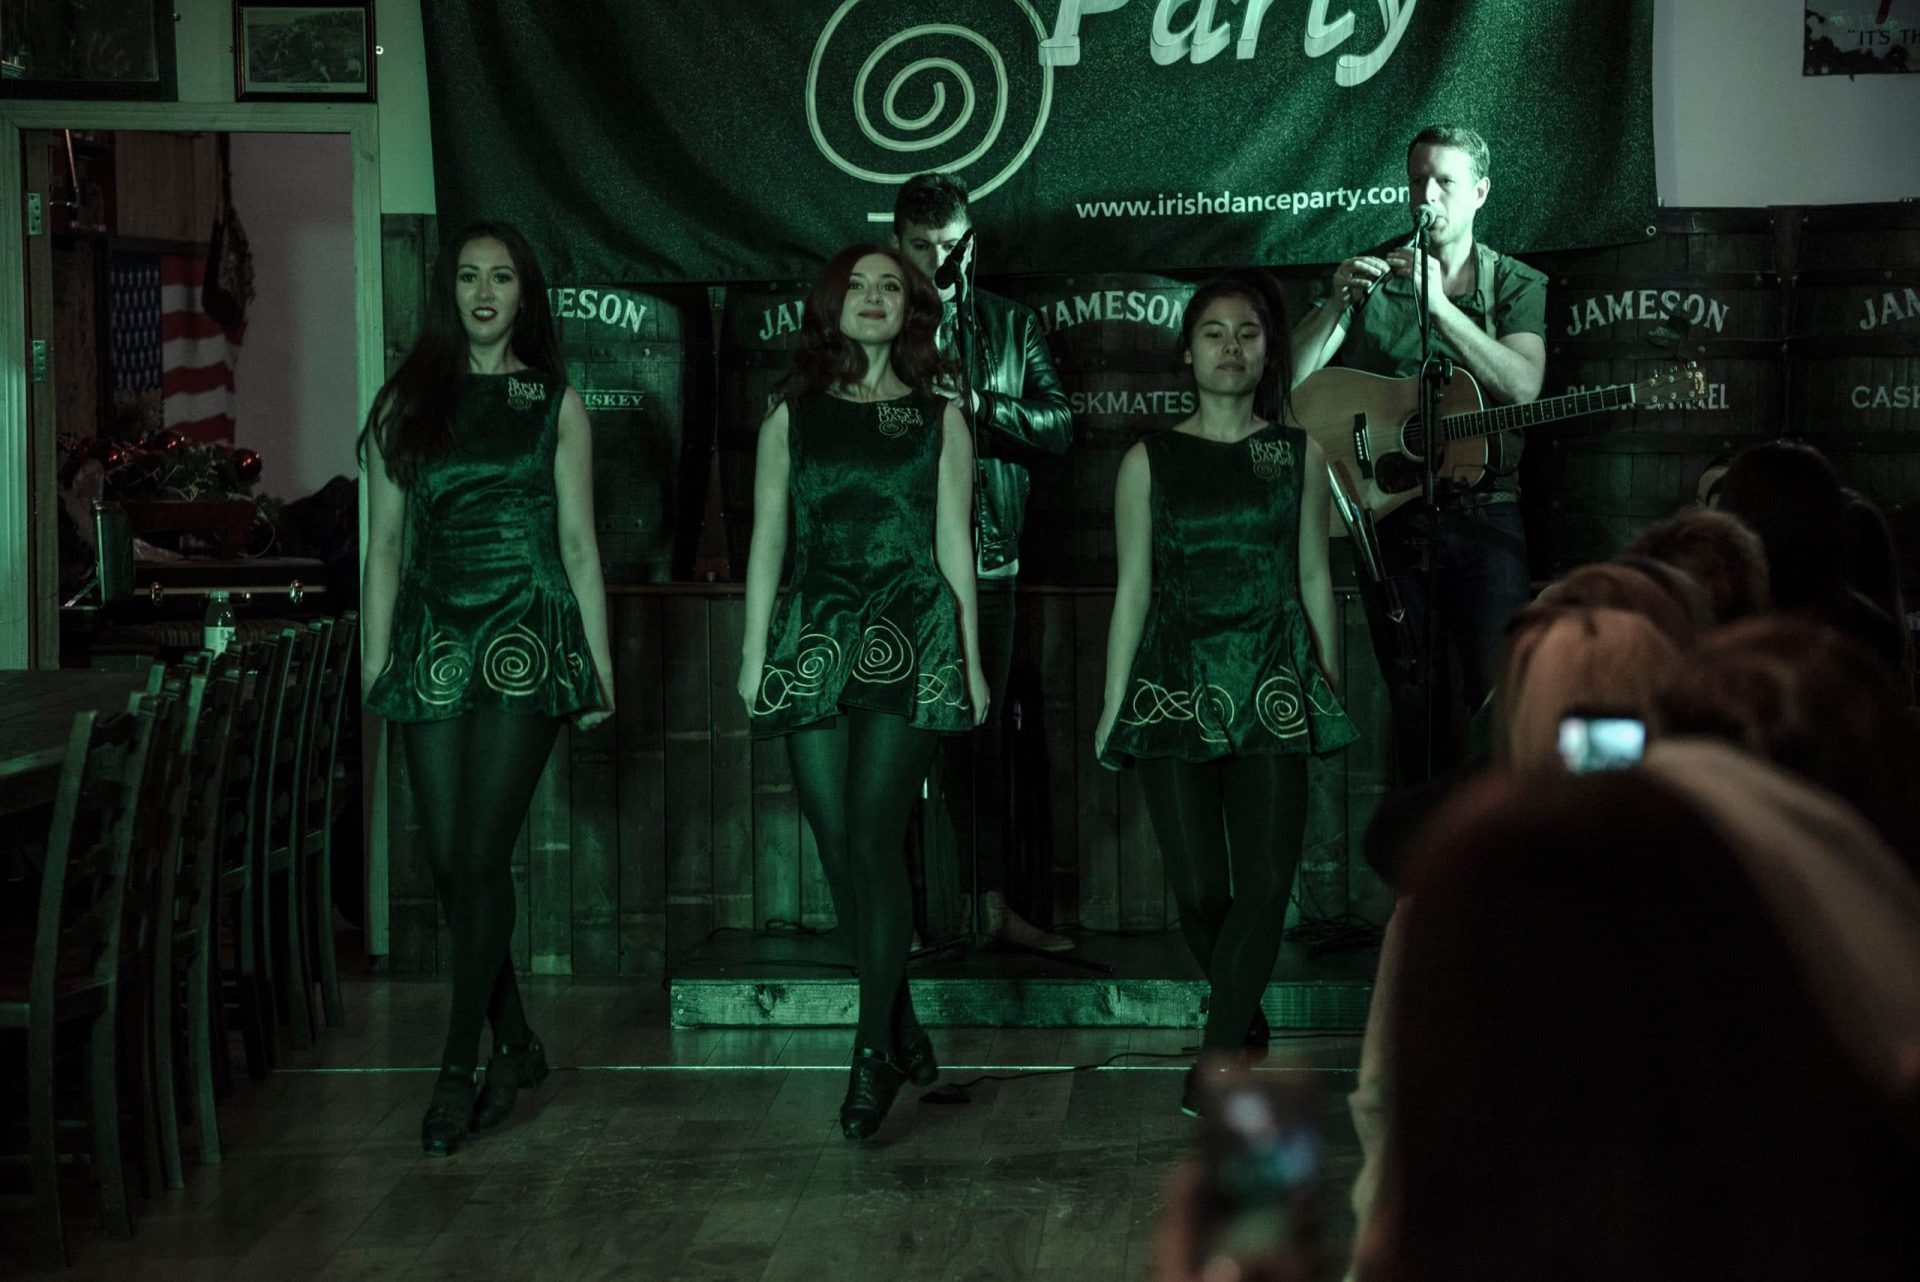 Hen party Irish dance performance